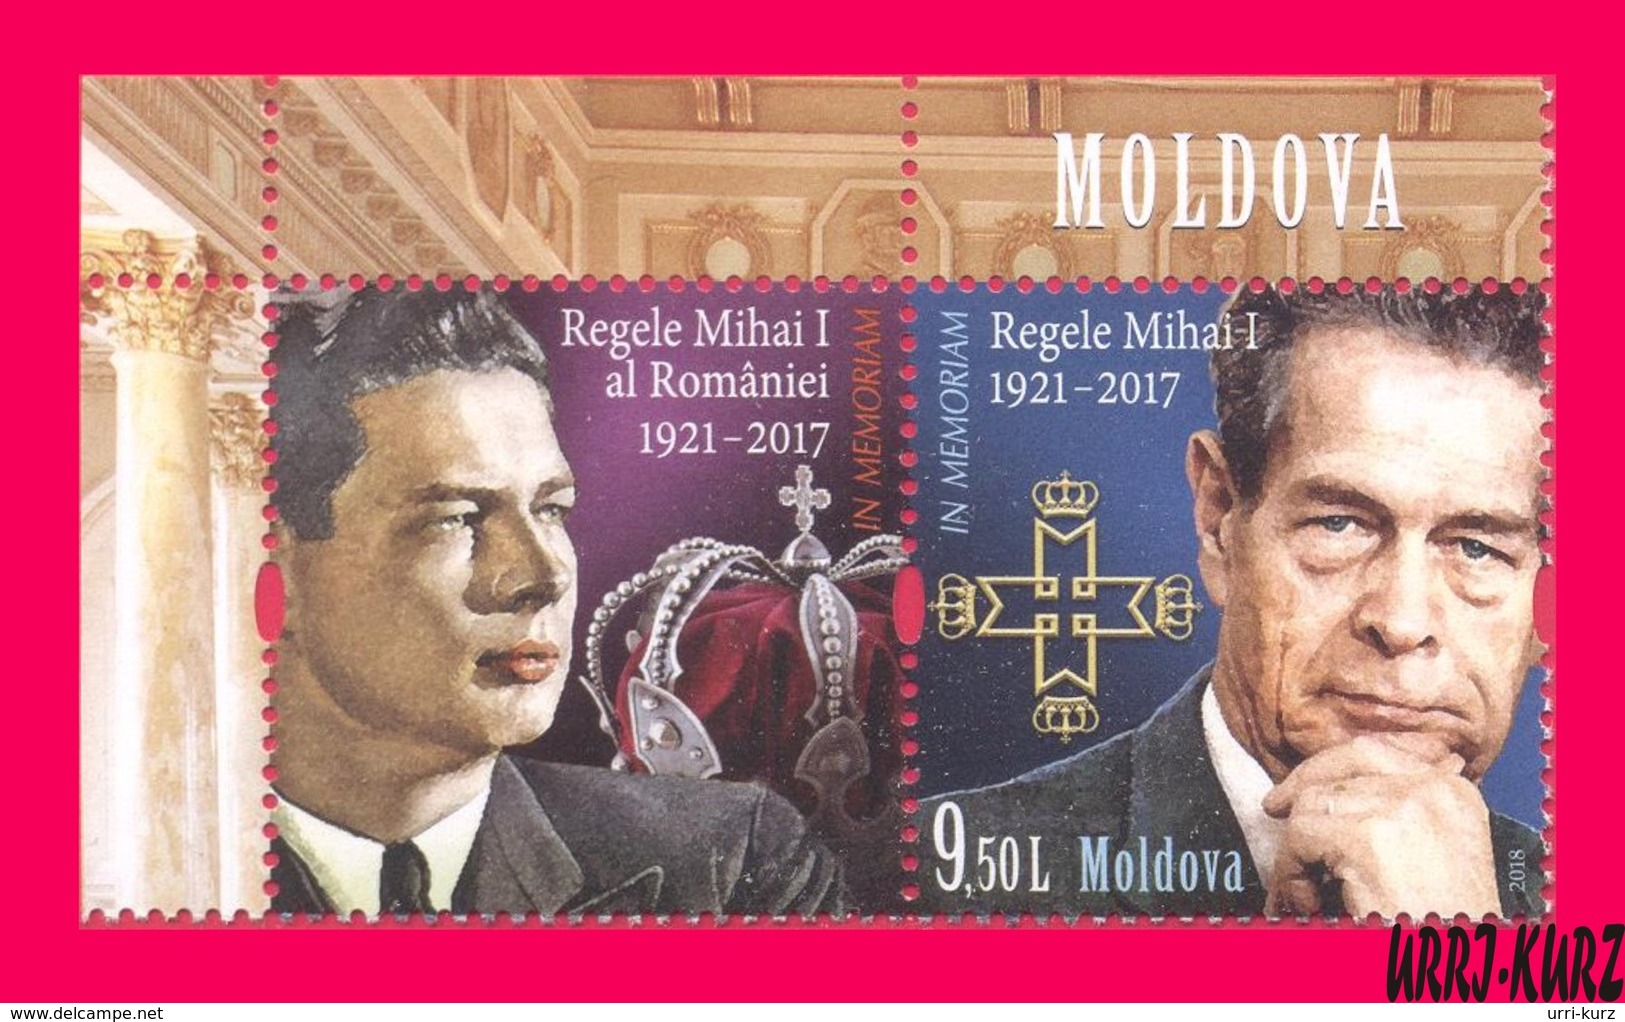 MOLDOVA 2018 Famous People Personalities Royalty Royals Last King Of Romania Mihai I (1921 – 2017) 1v+ Mi1072 Sc1008 MNH - Moldavia